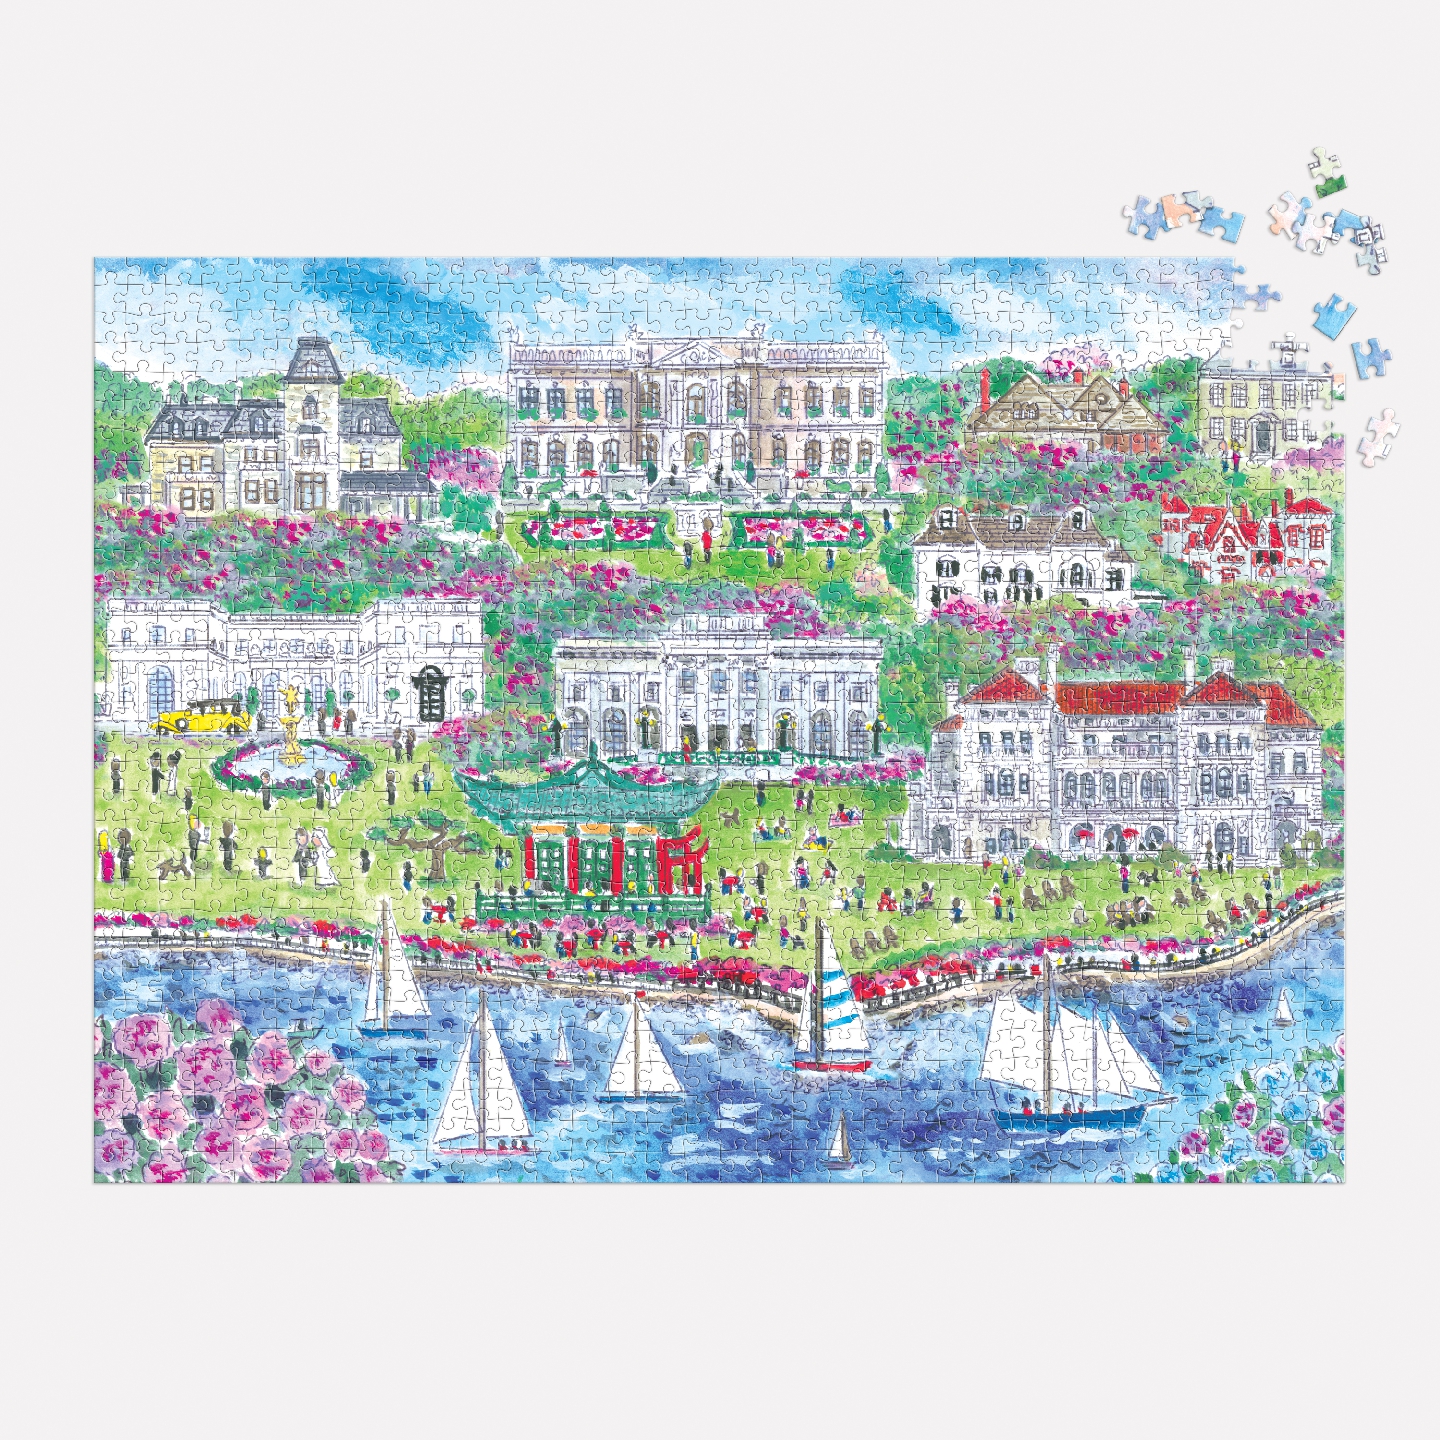 Michael Storrings Newport Mansions 1000 Piece Puzzle